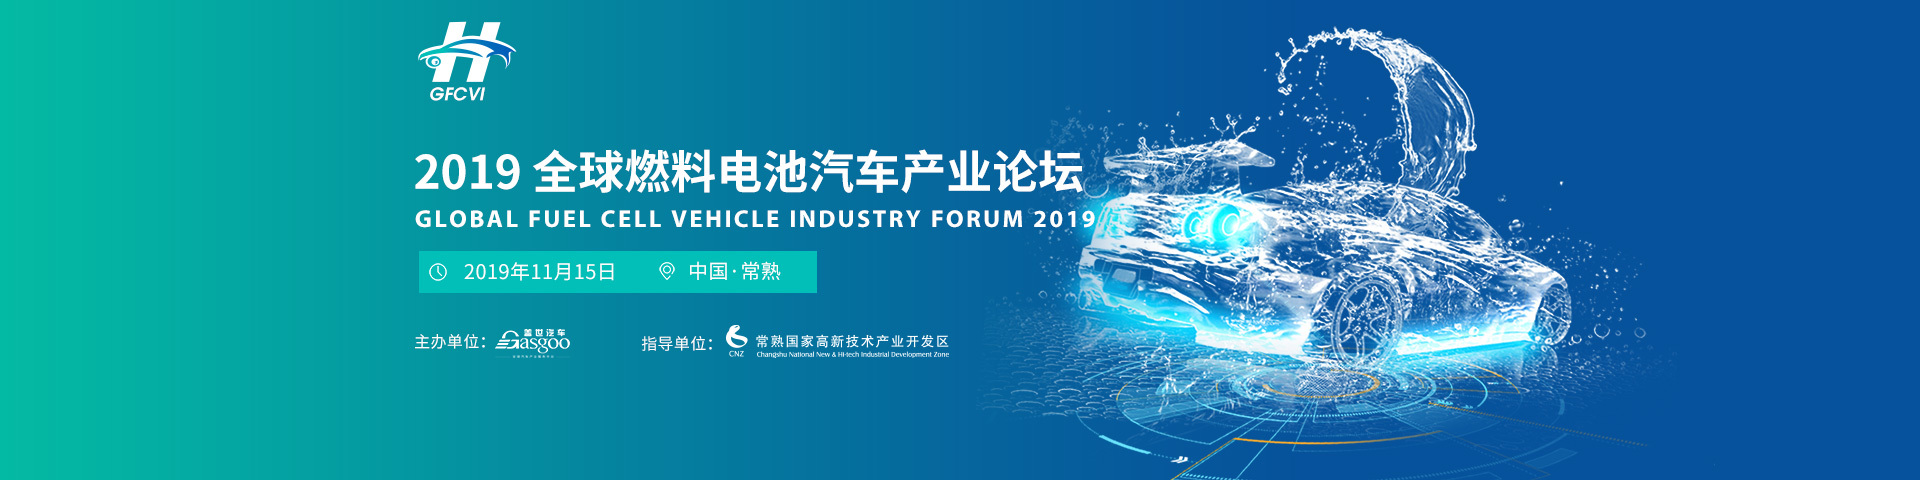 2019全球燃料电池汽车产业论坛 Global Fuel Cell Vehicle Industry Forum 2019